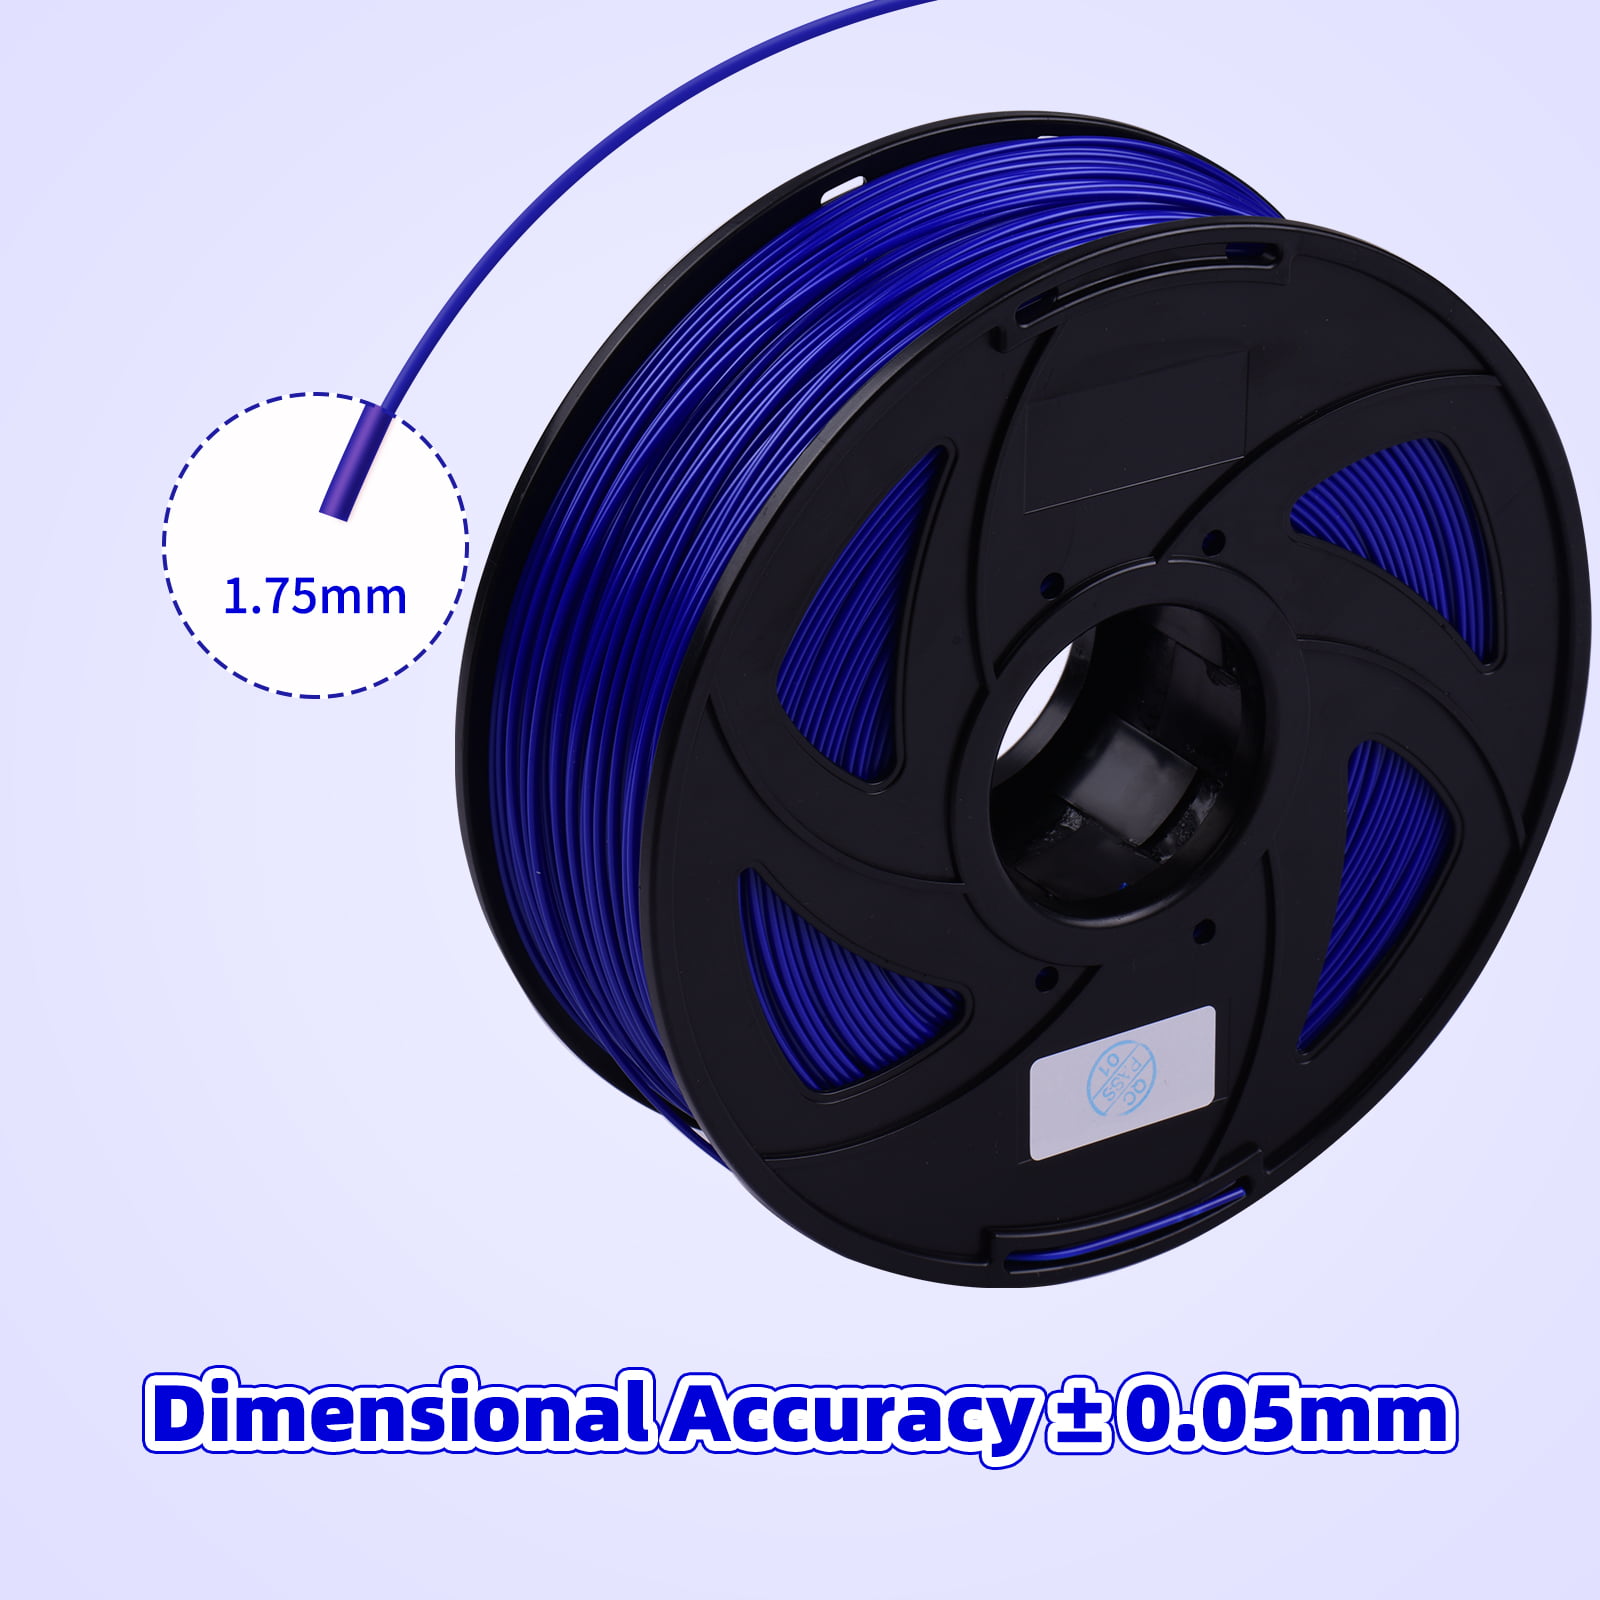 Details about   3D Printer Filament PETG 1.75mm Various Colours Printing Available 1KG Available 